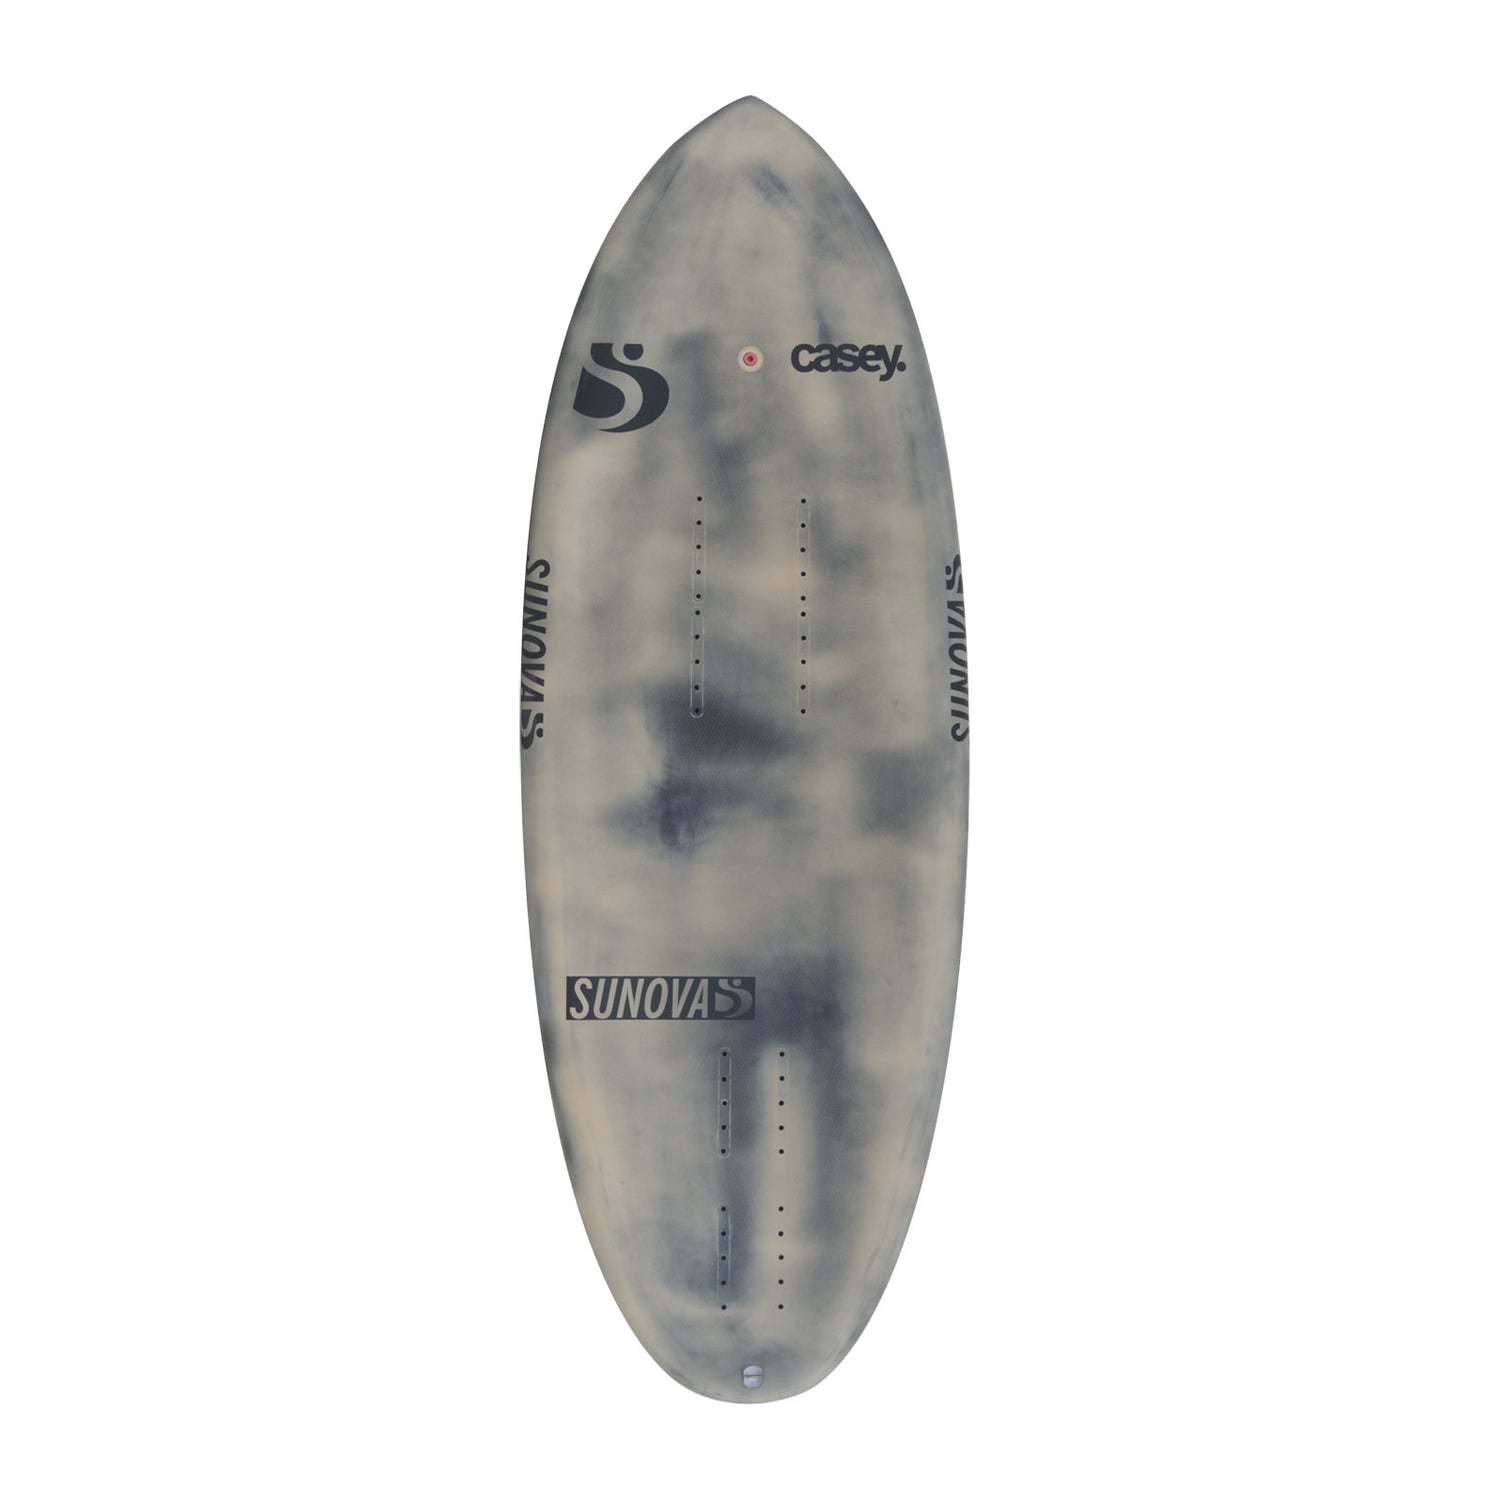 Deck Ansicht des Sunova Casey Pilot Surf Pronefoil Board in der CarbonTec Bauweise.